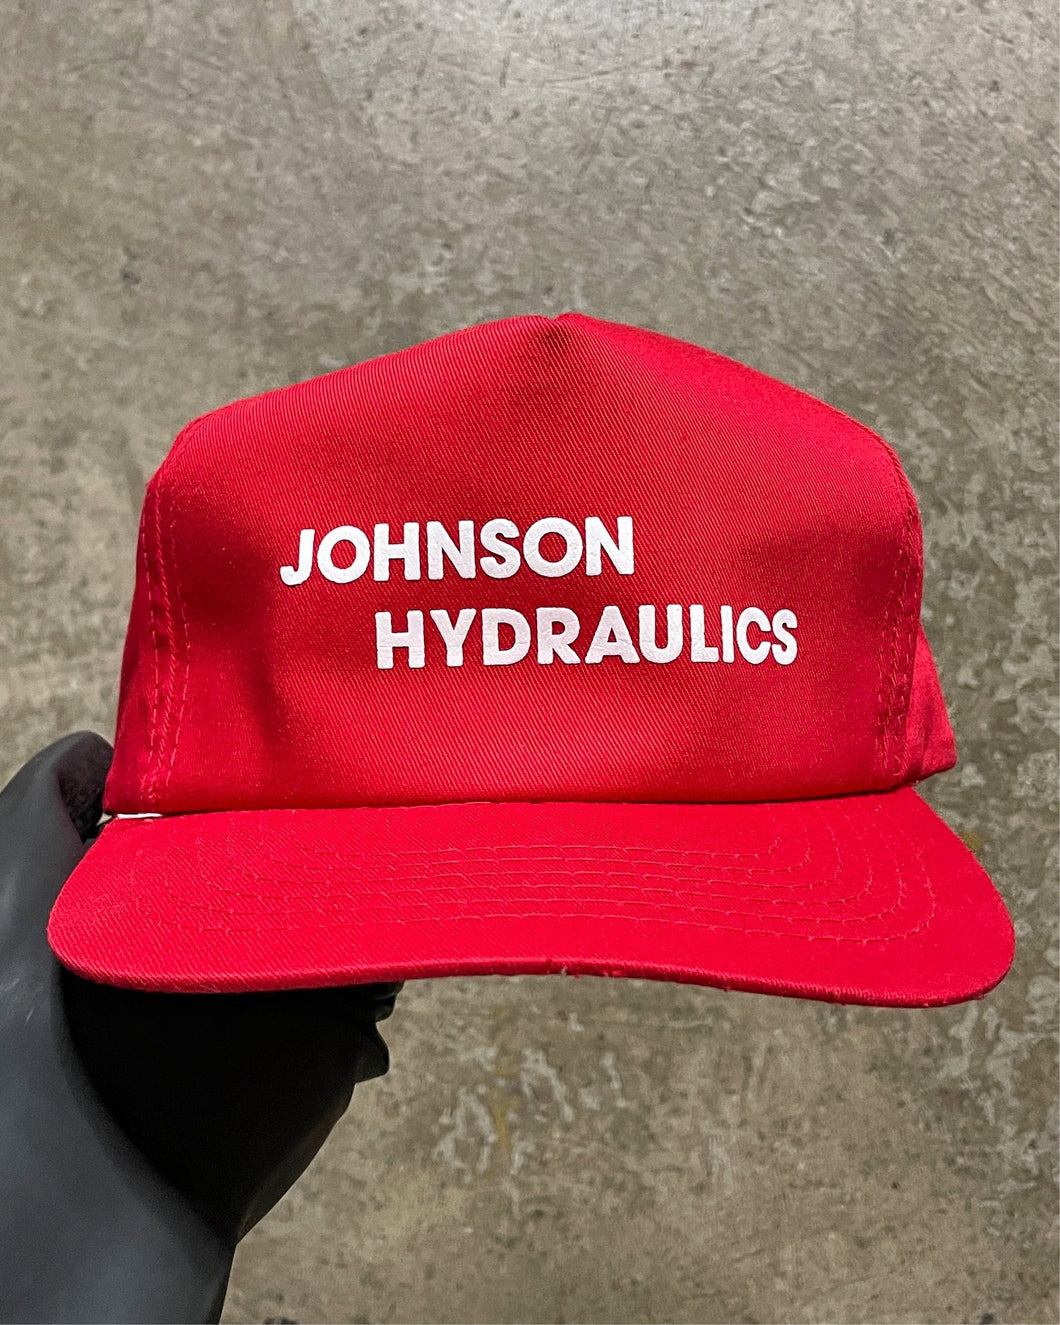 “JOHNSON HYDRAULICS” RED SNAPBACK HAT - 1990s